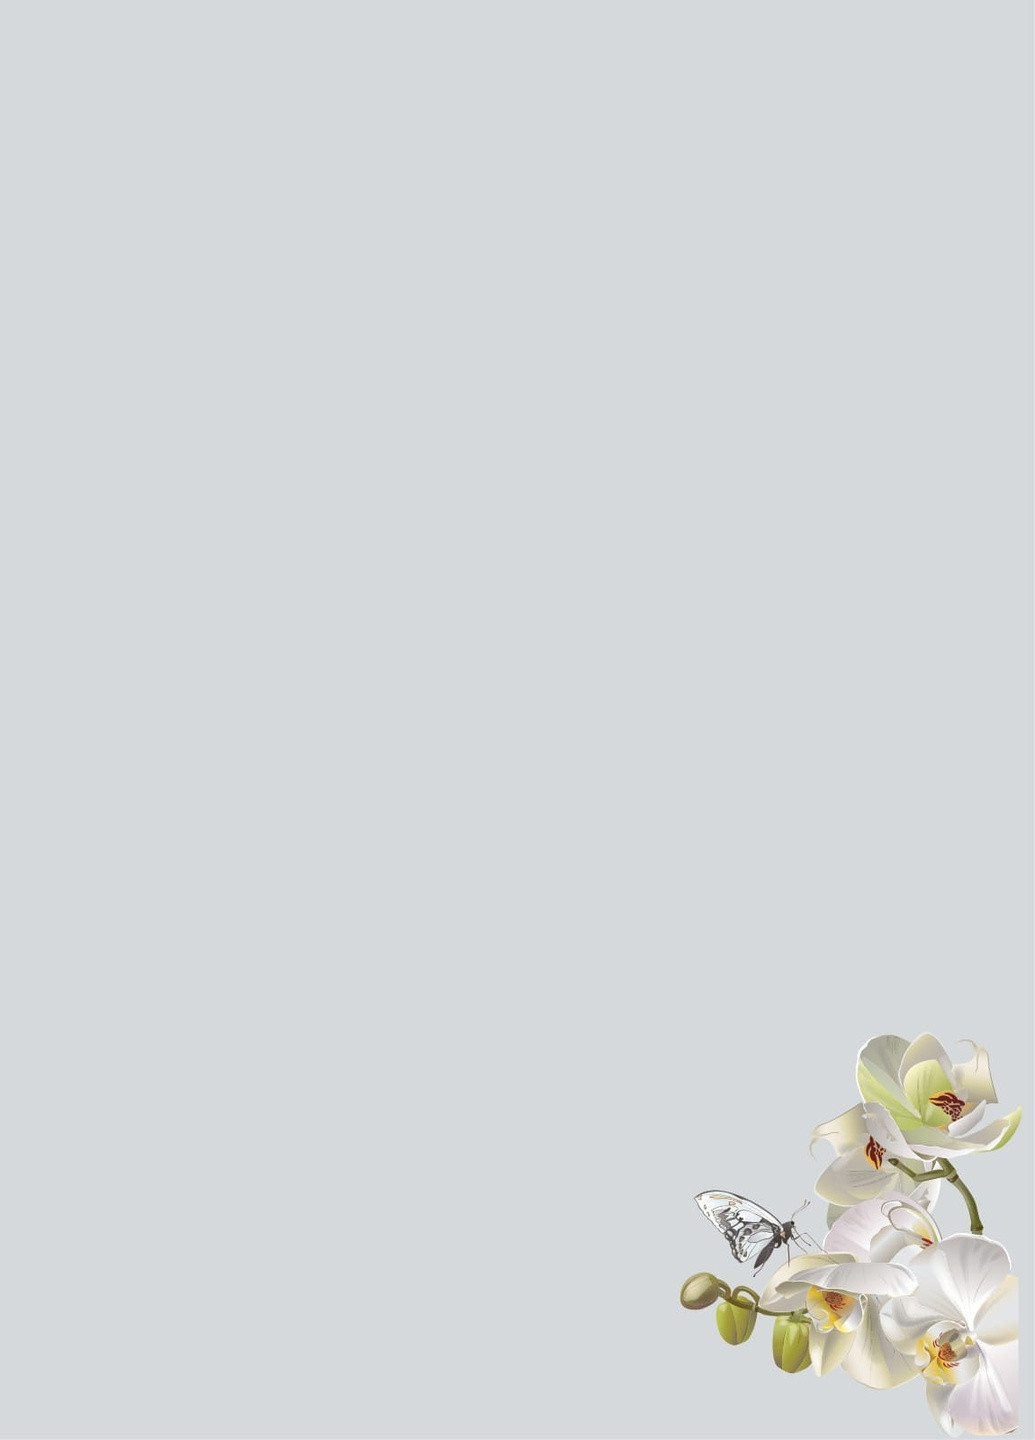 Блокнот "Beautiful flowers" orchid, 64 листа формат А5 905317 4PROFI (258525610)